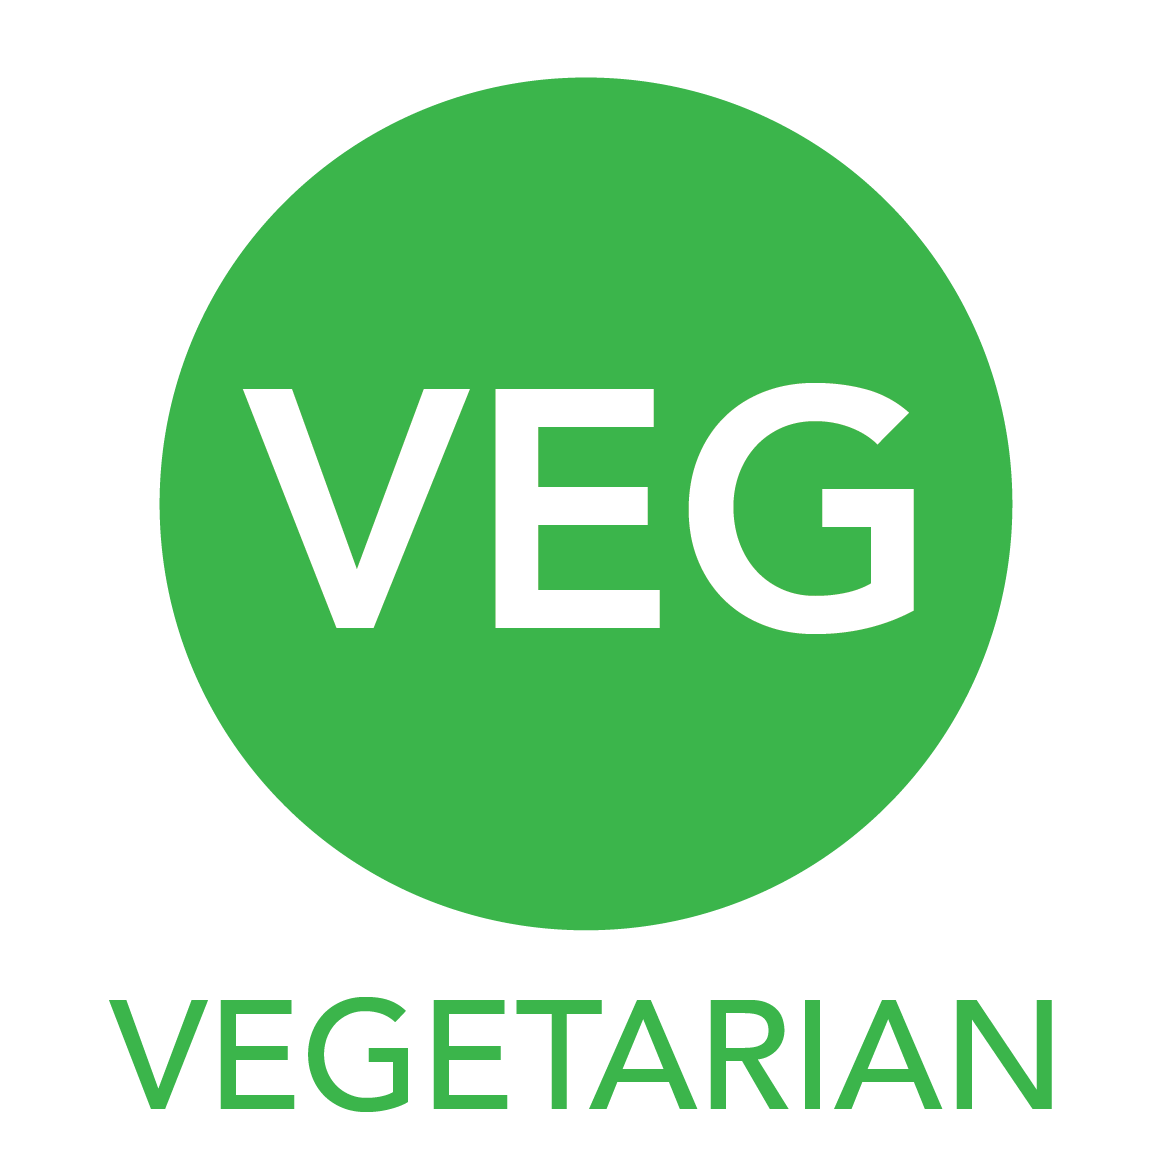 Vegetarian food options icon